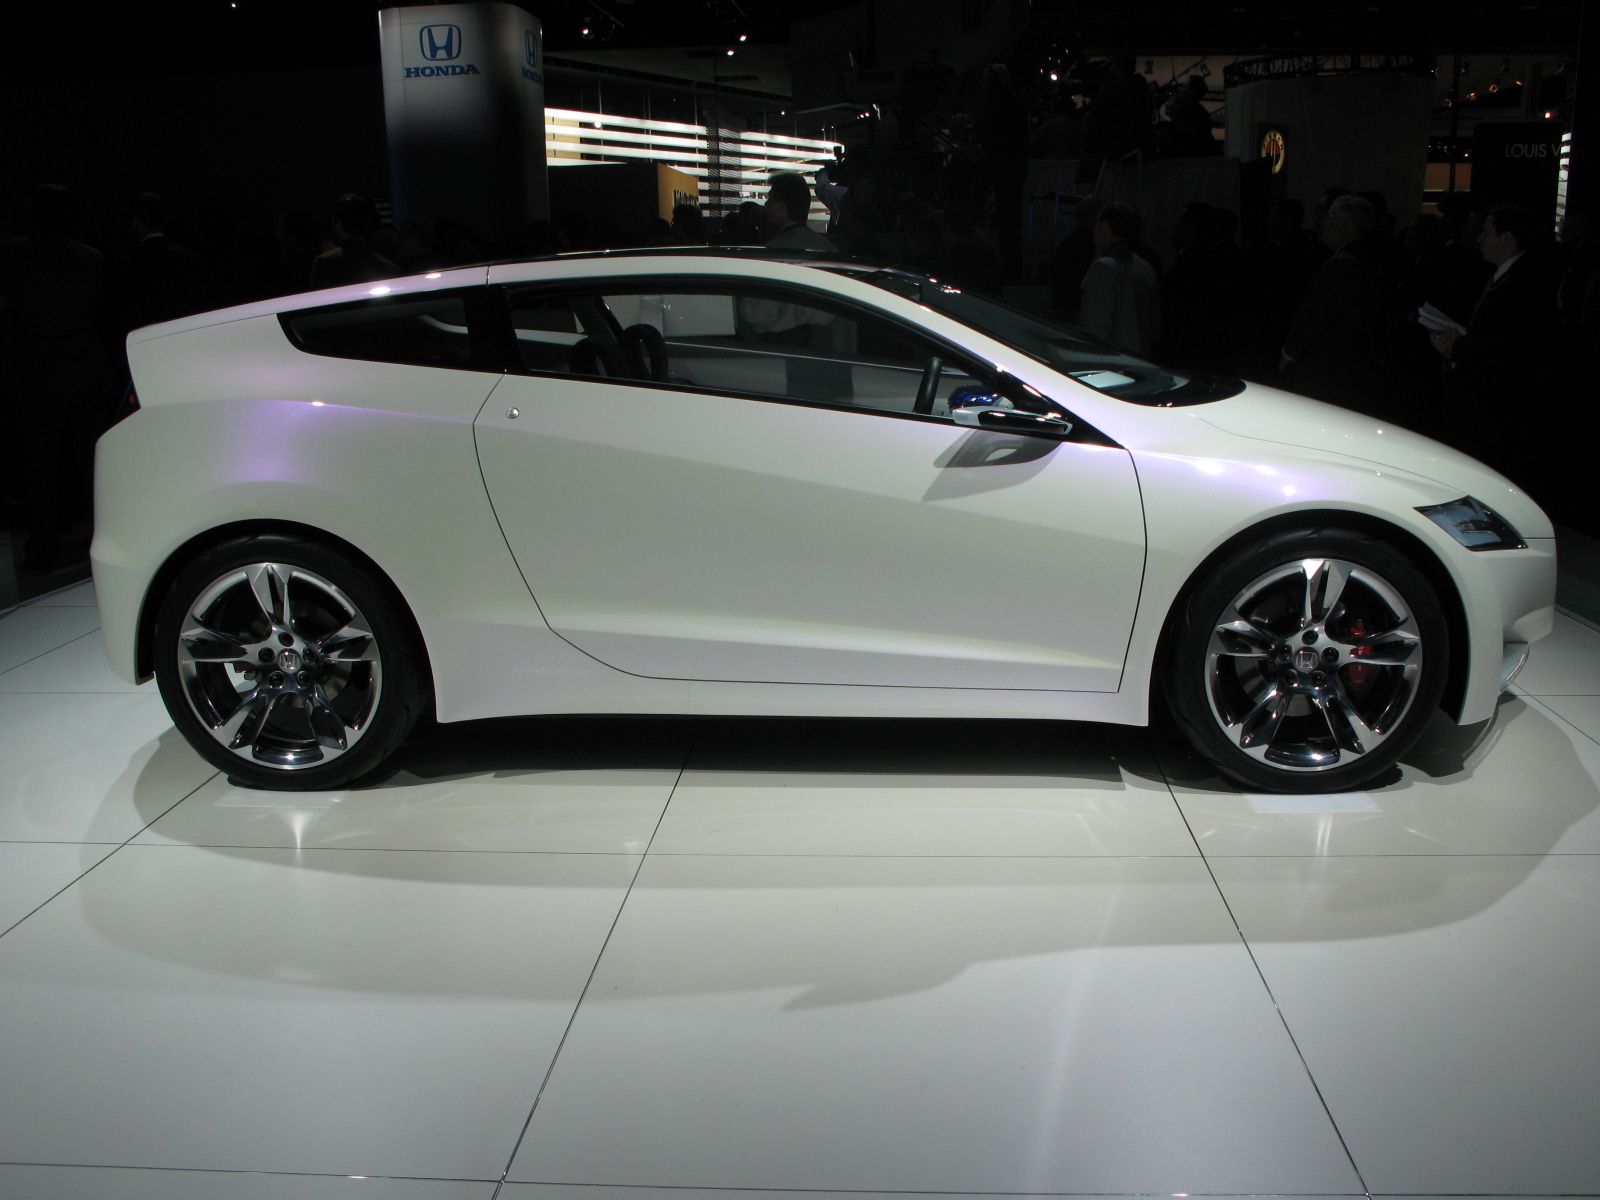 Honda CR-Z (2009), Concept Cars